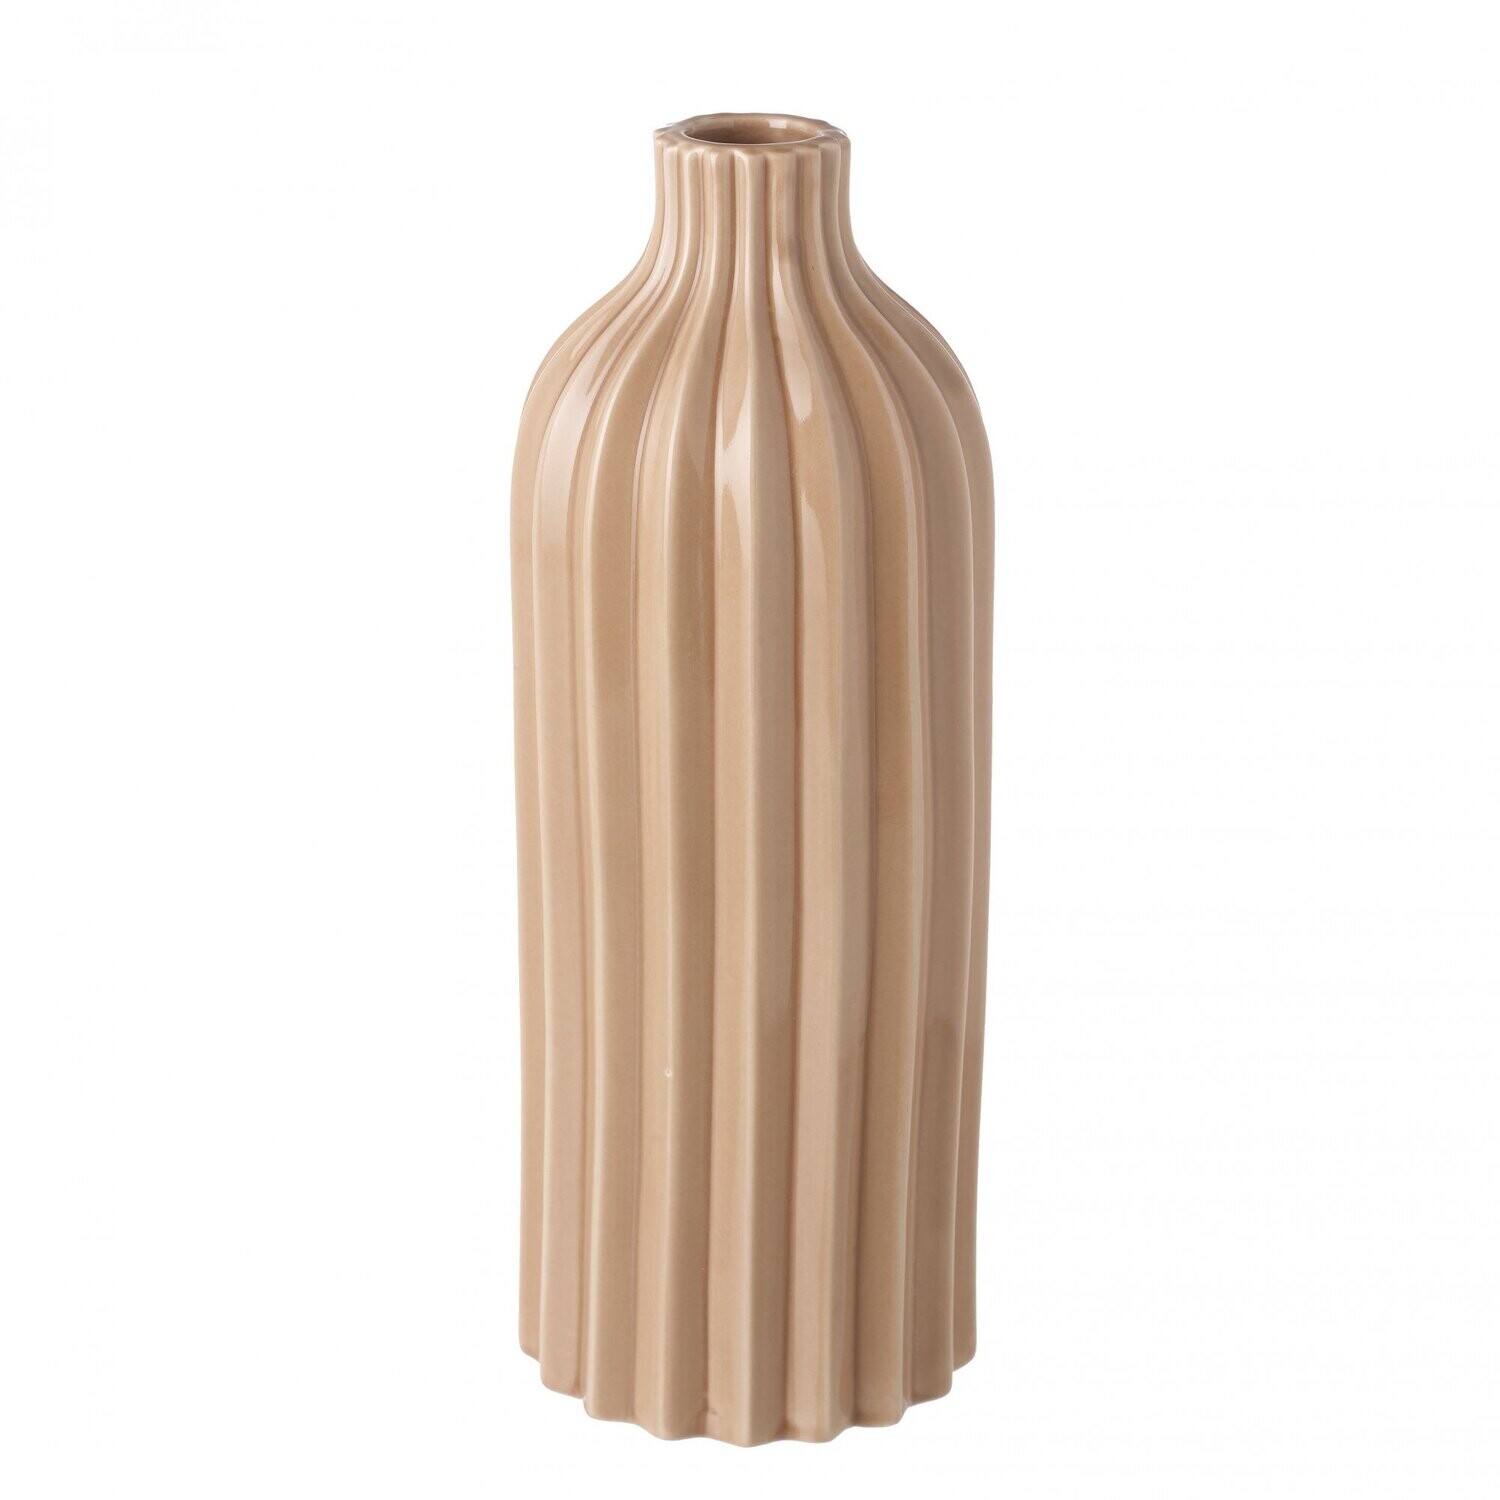 Zara Peach Tall Vase